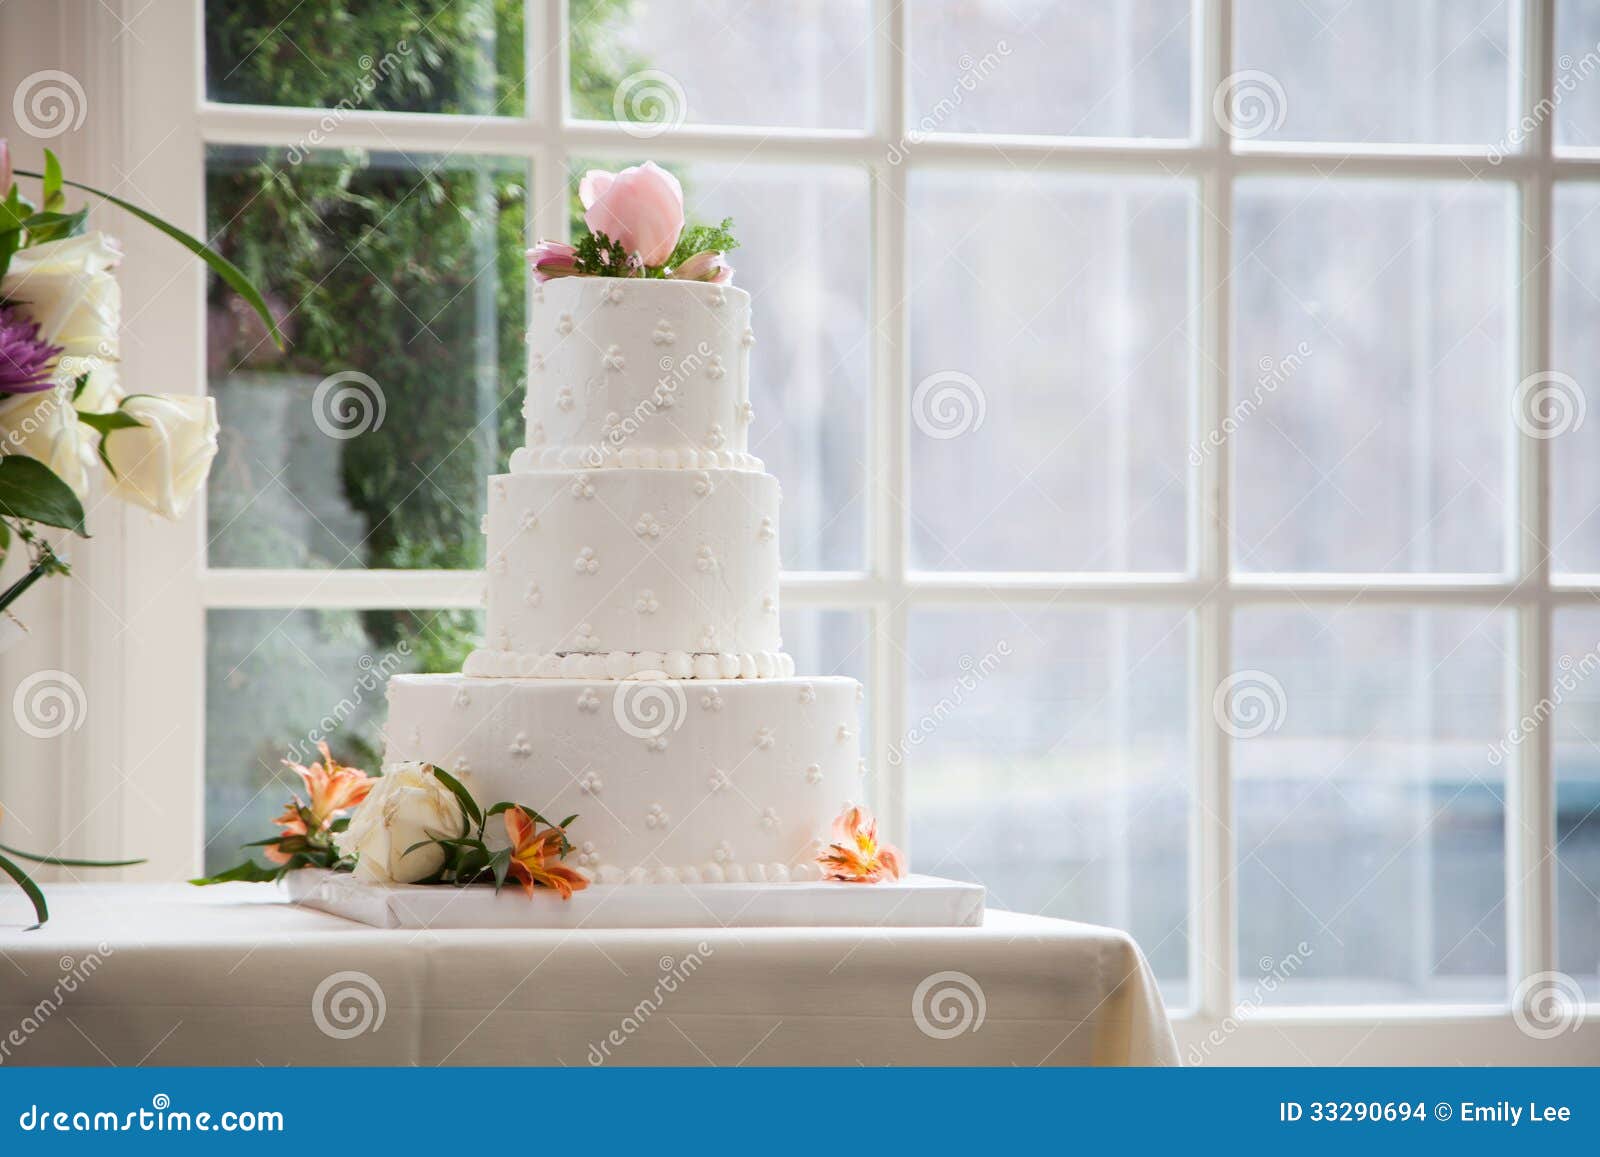 Elegant wedding cakes with flowers